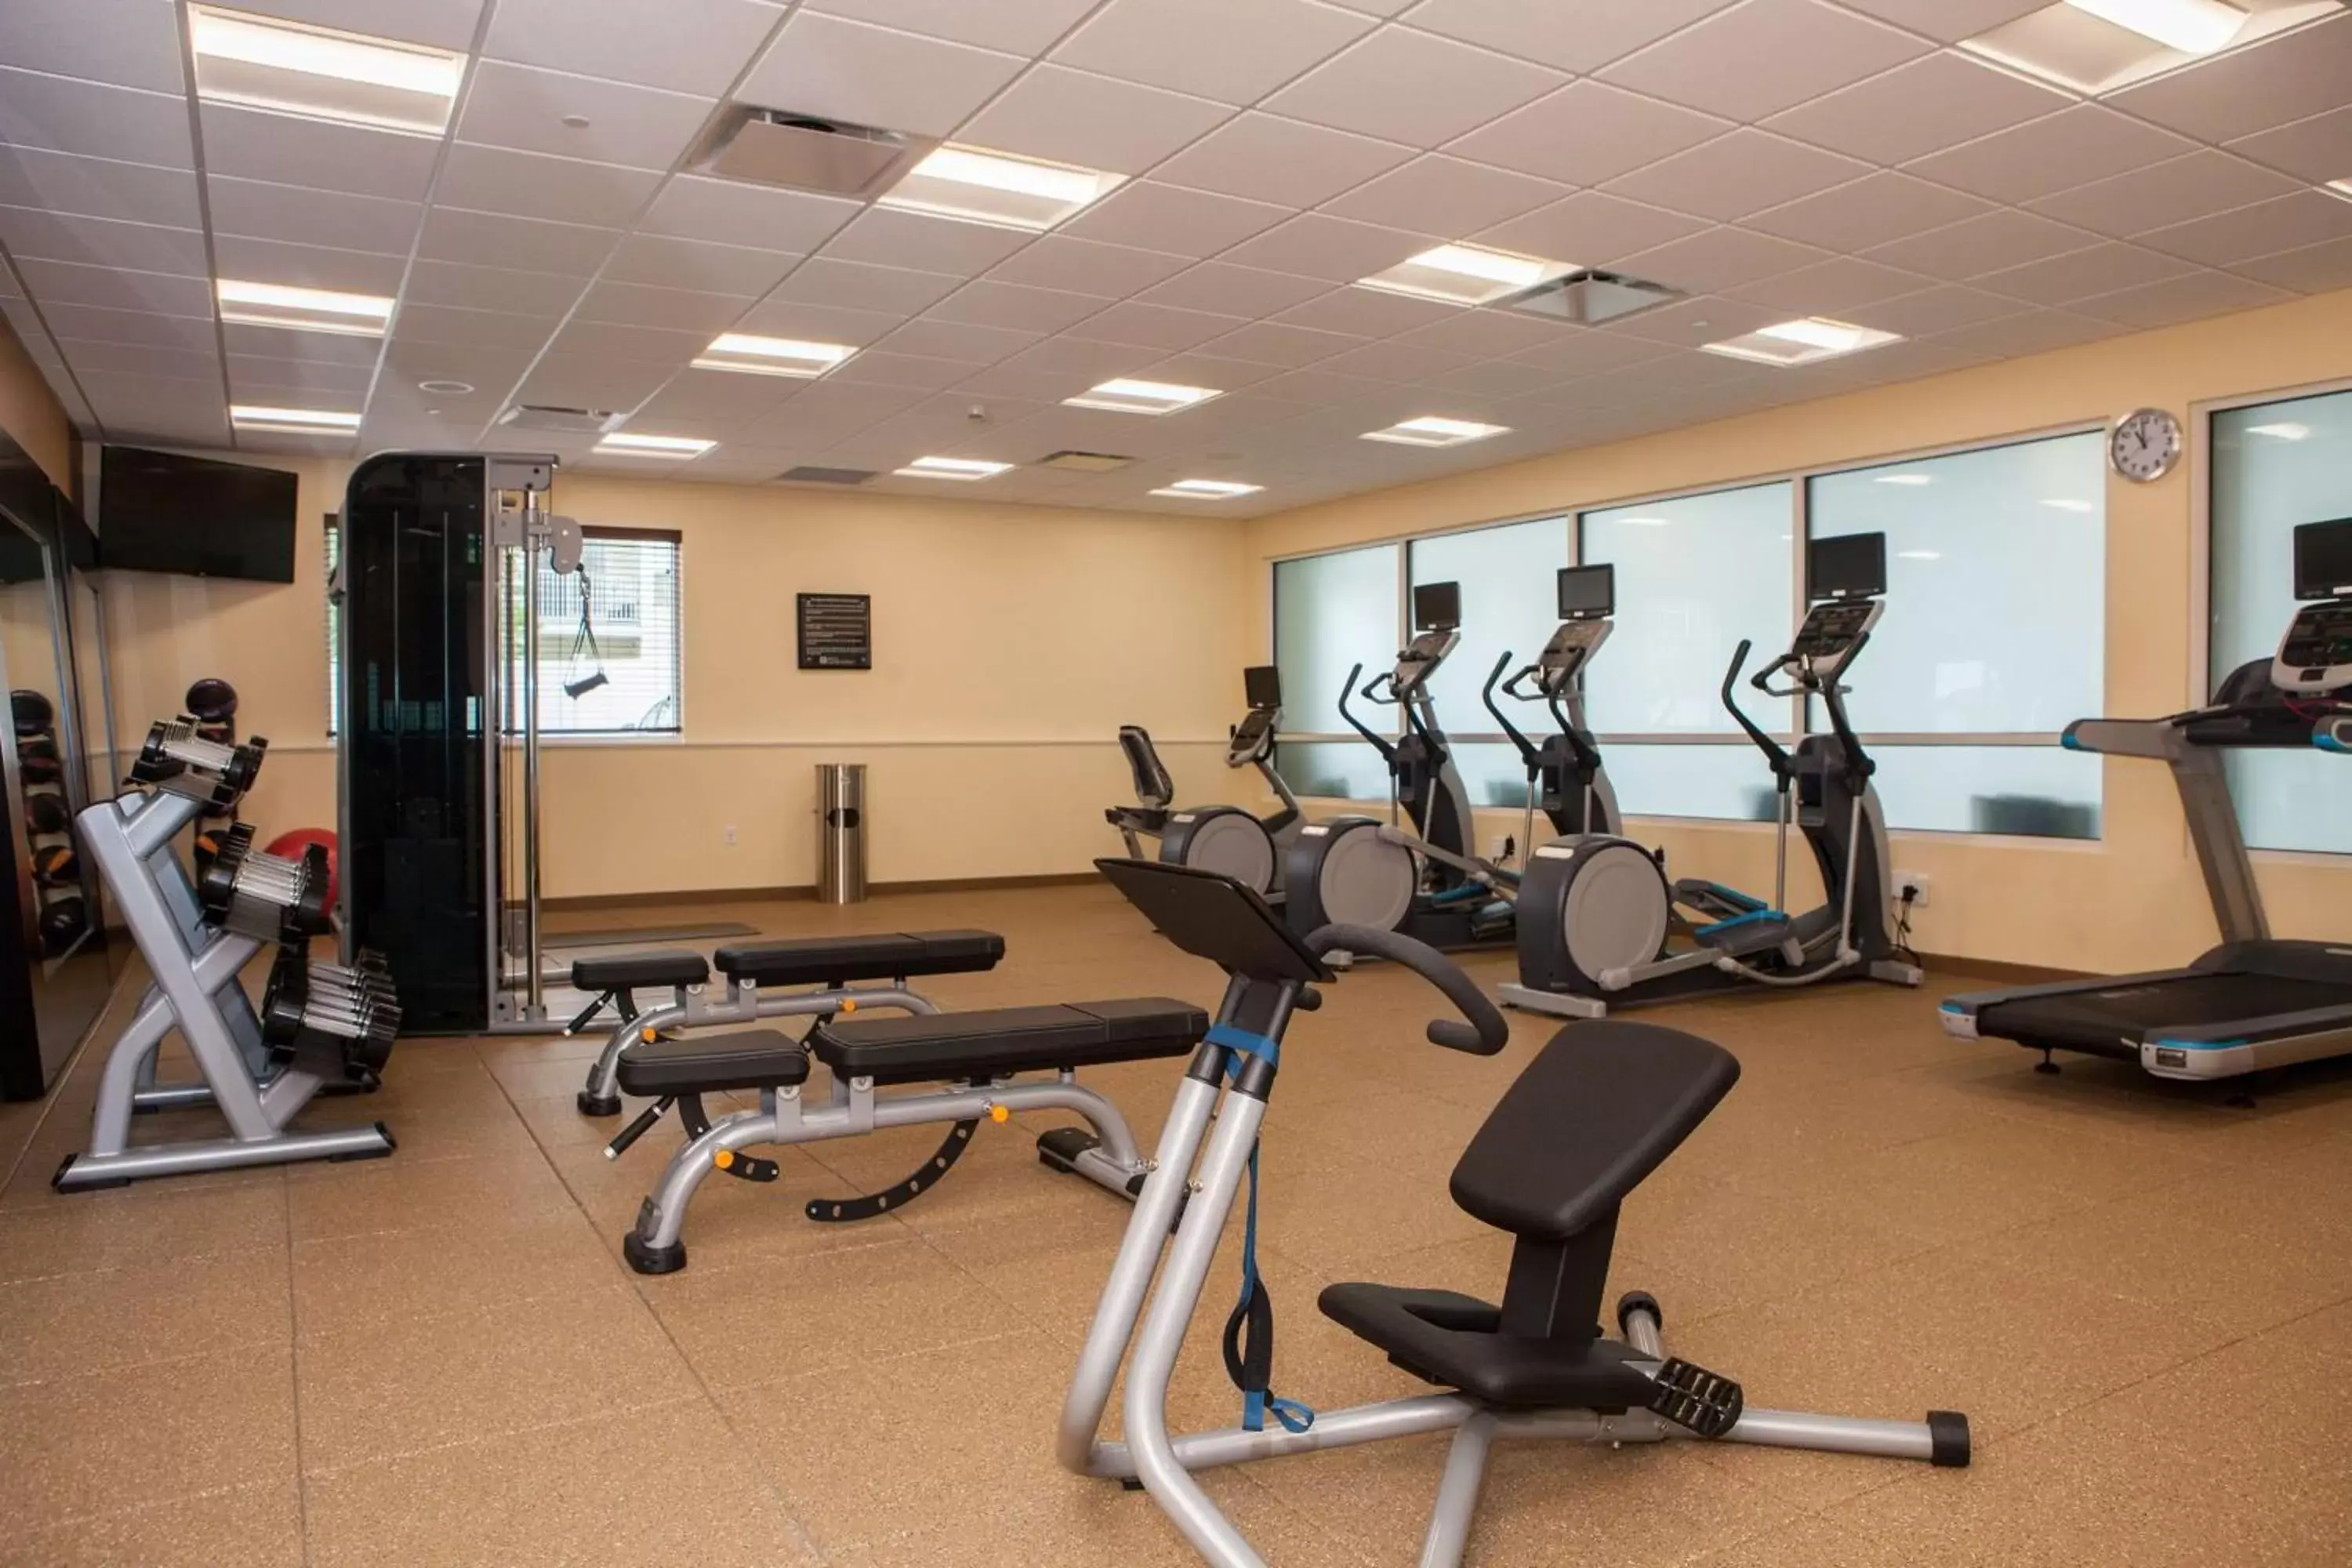 Fitness centre/facilities, Fitness Center/Facilities in Hilton Garden Inn Springfield